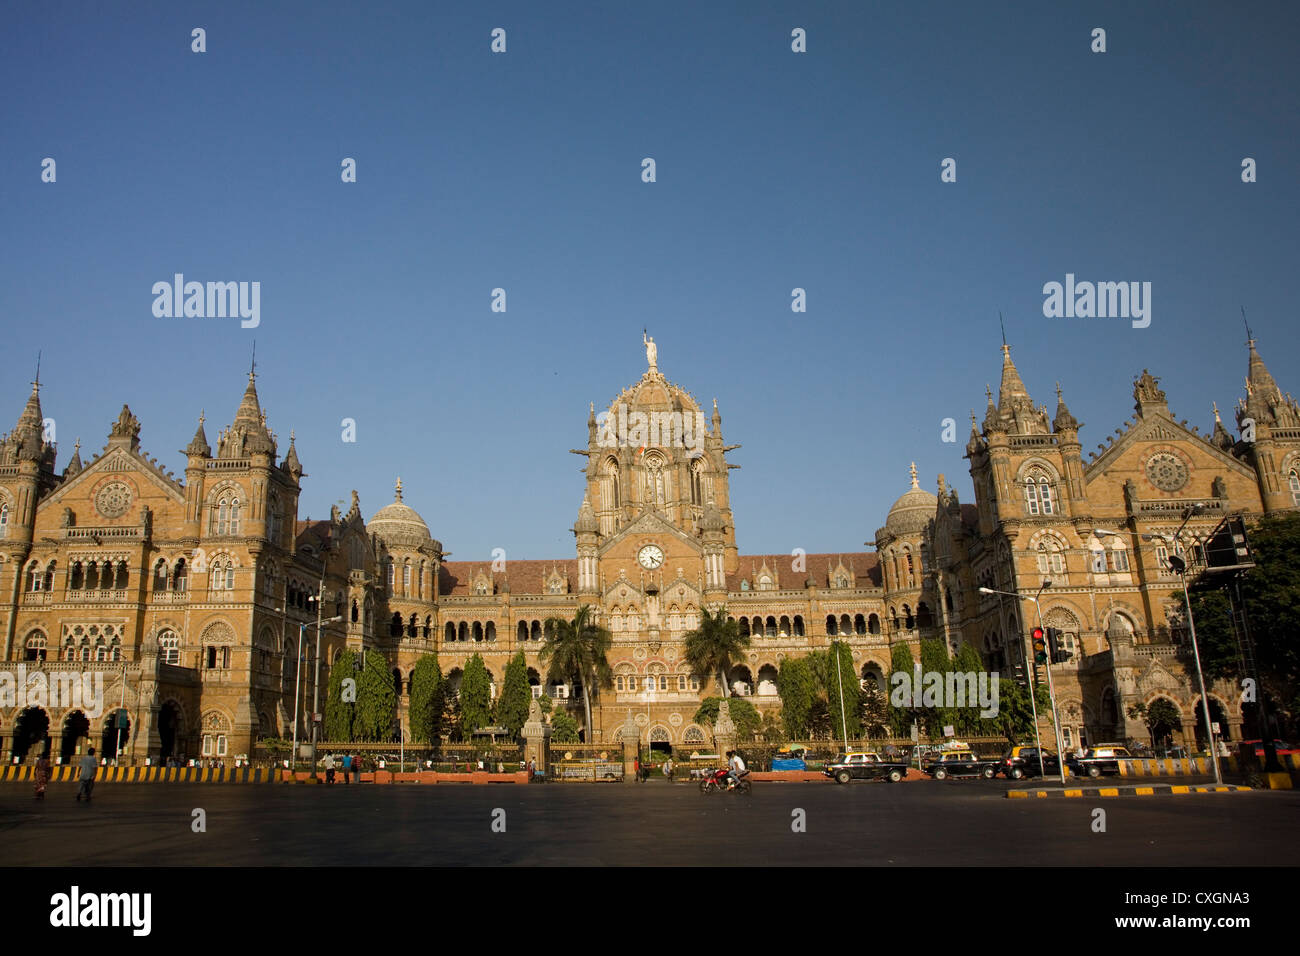 Der Chhatrapati Shivaji Terminus wurde offiziell bekannt als Victoria Terminus, Mumbai, Indien. Stockfoto